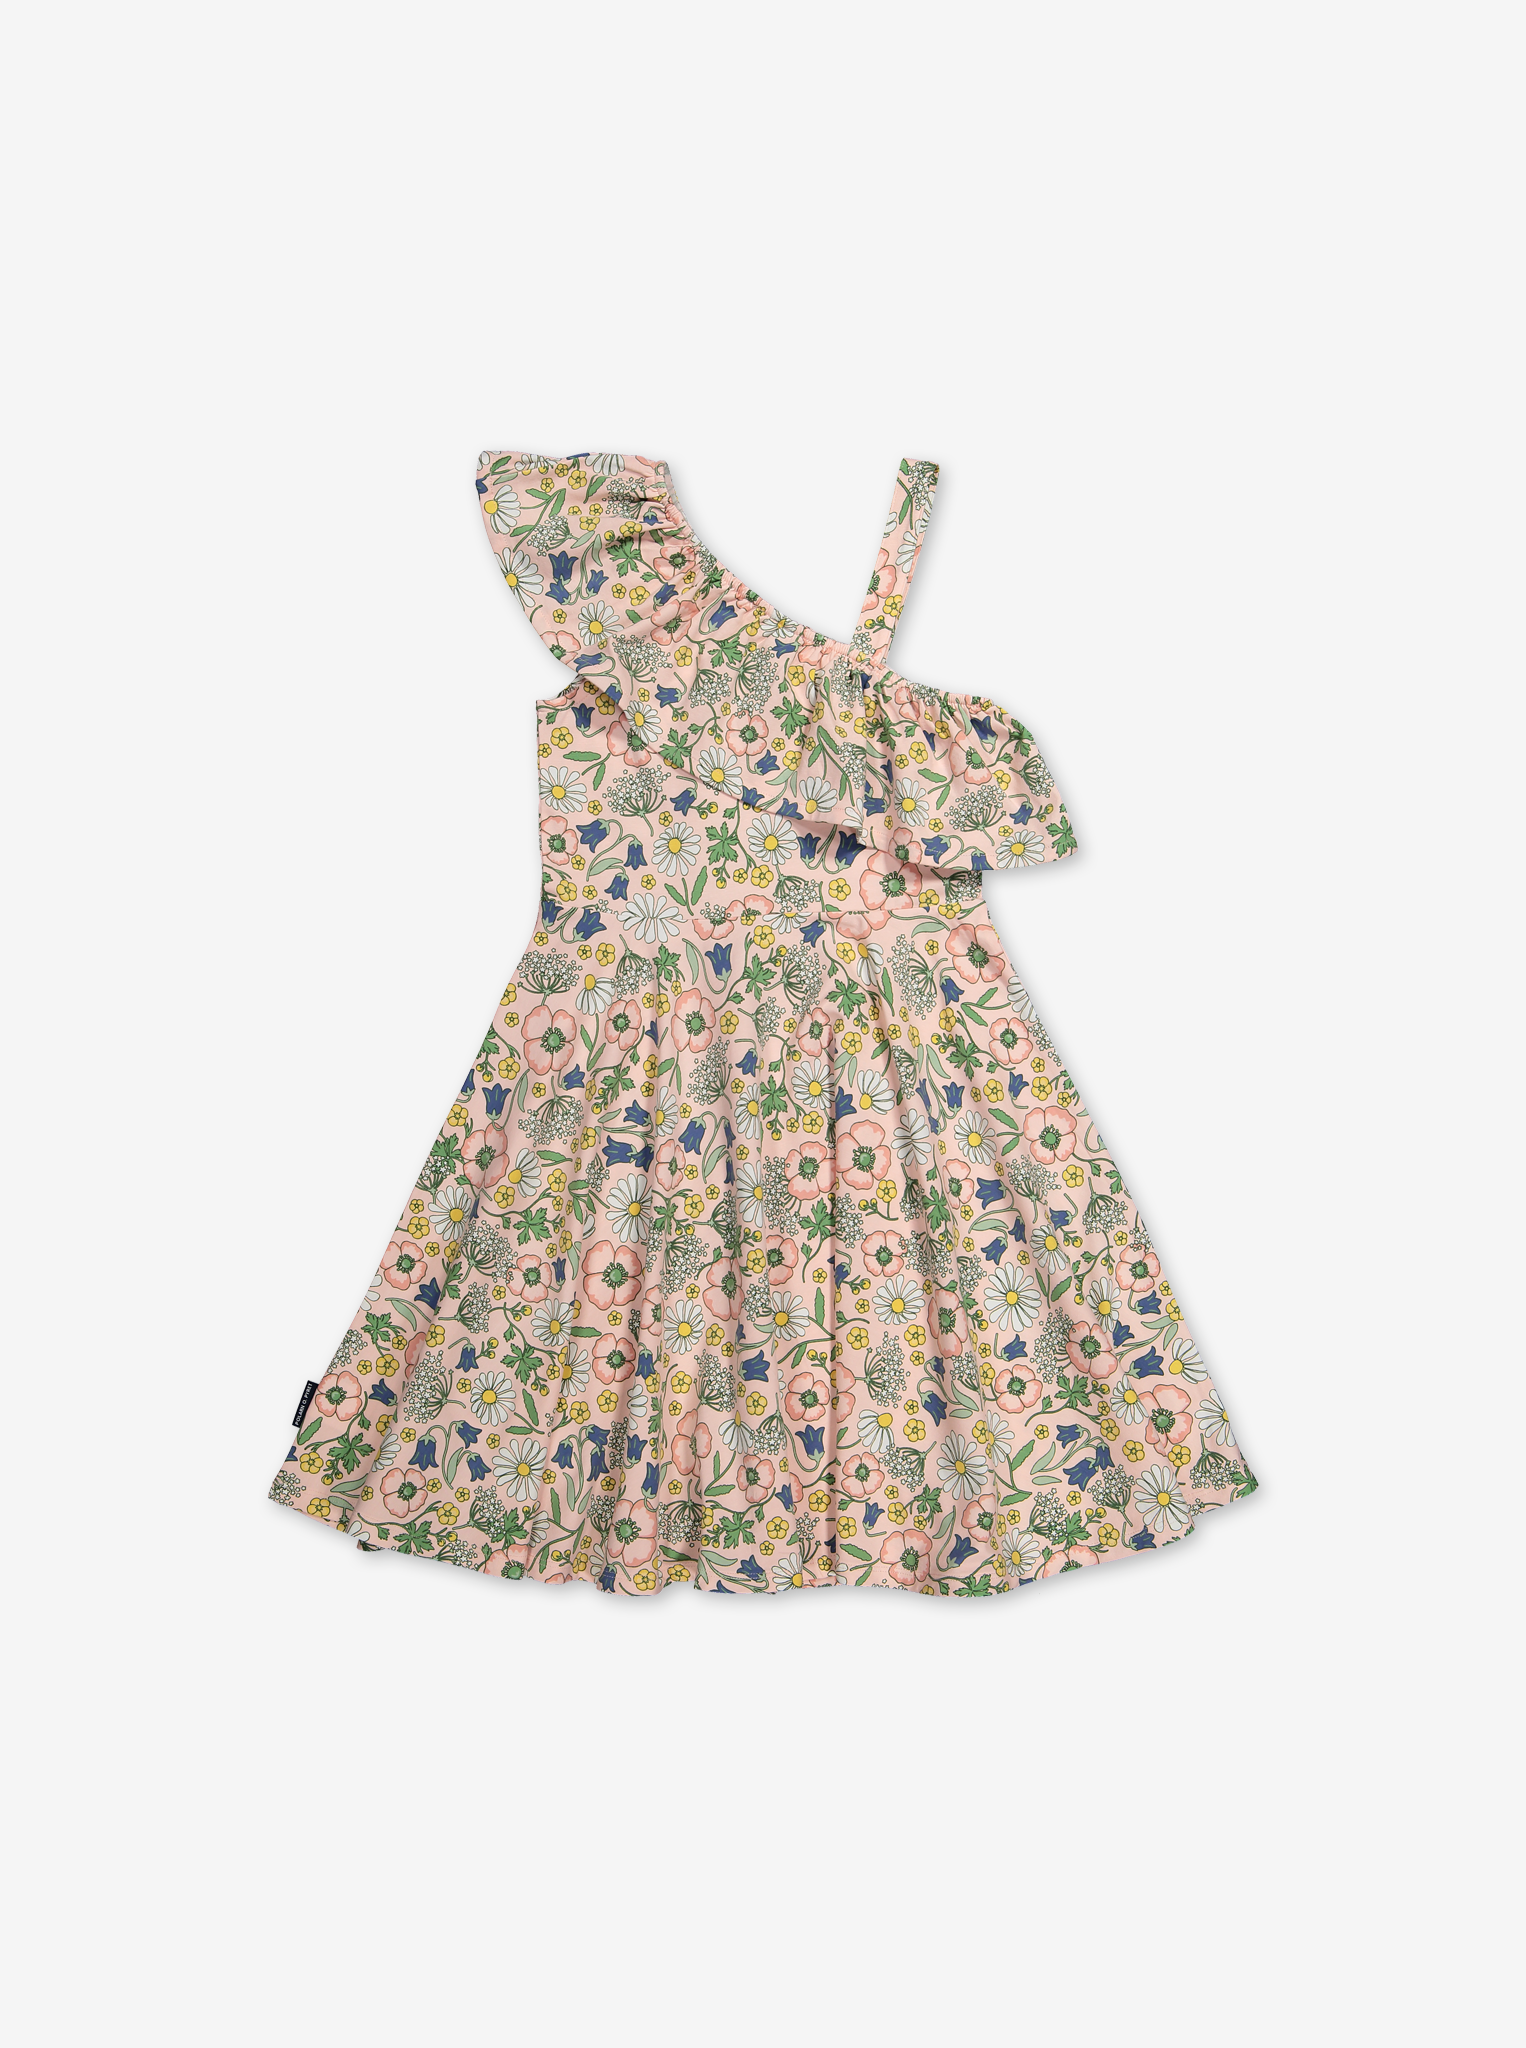 Scandi Floral Kids Dress-Girl-6-12y-Pink